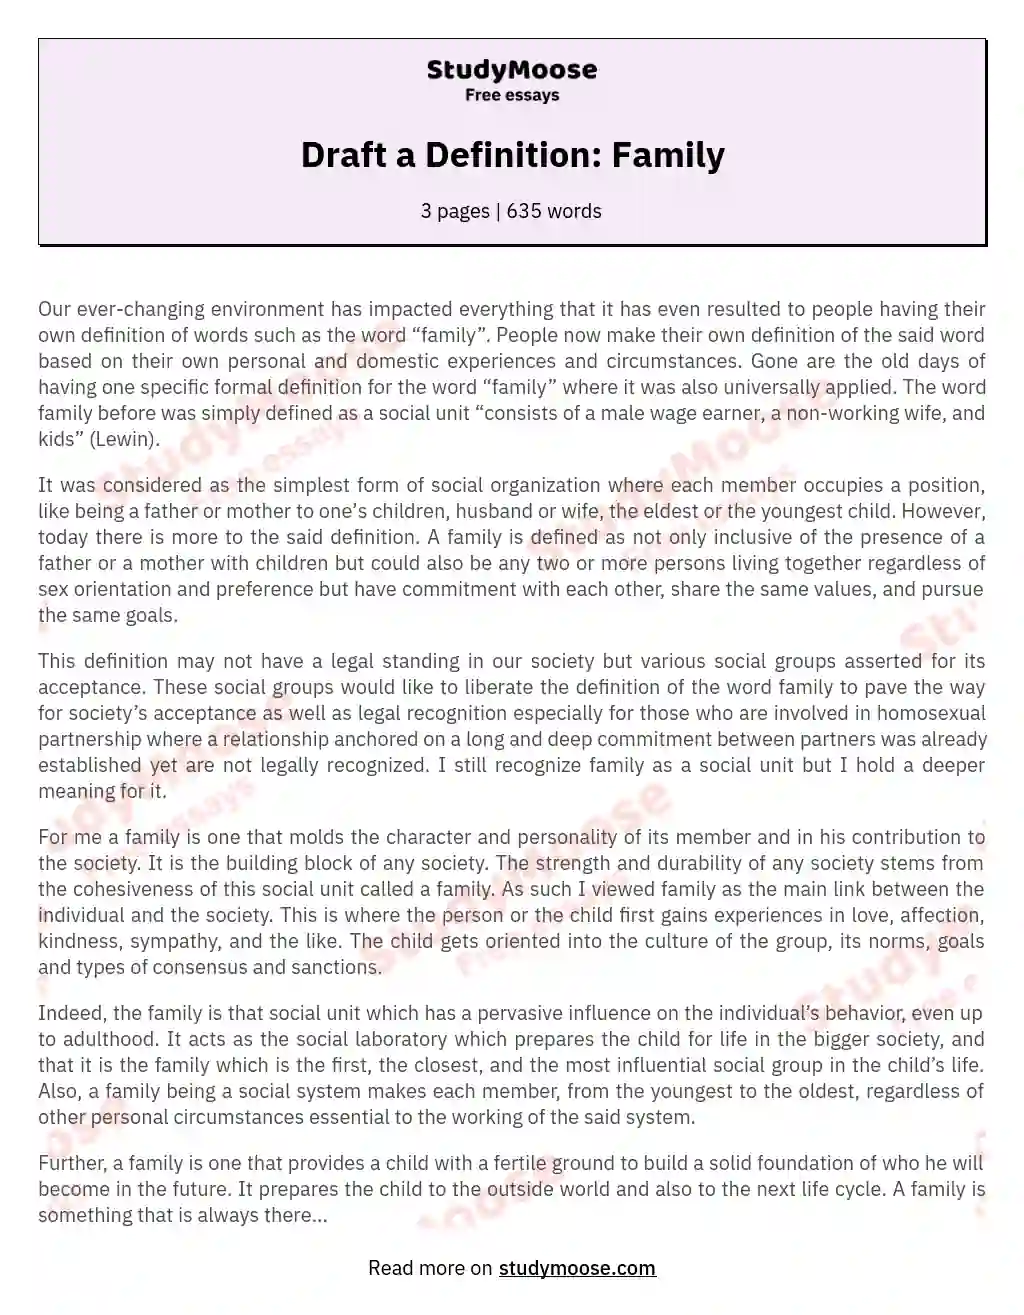 Draft a Definition: Family essay